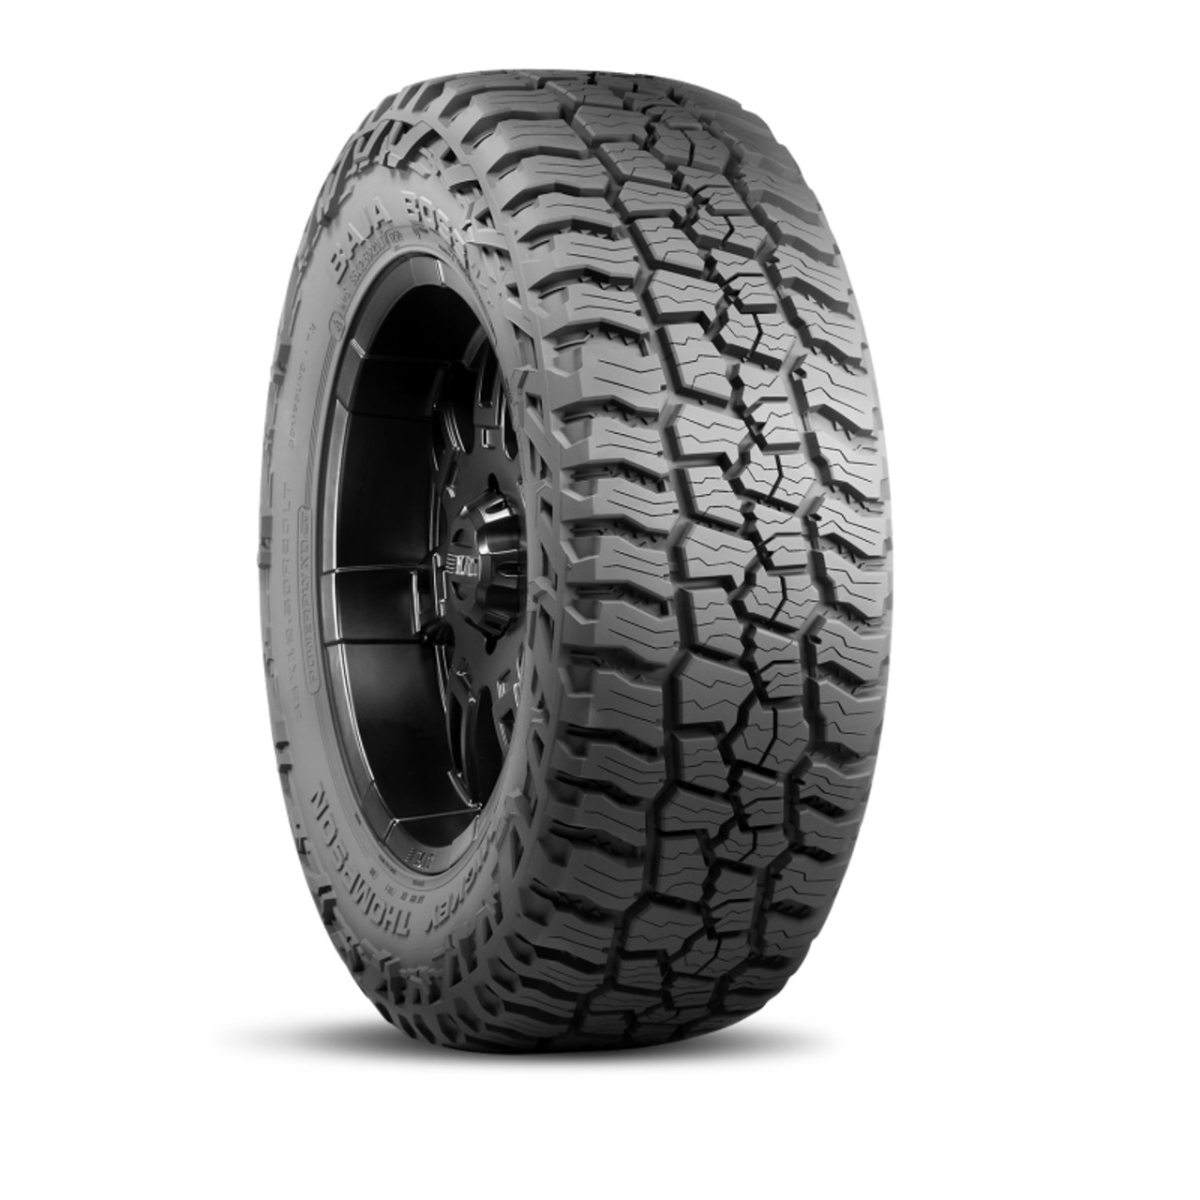 Picture of Mickey Thompson 36820 LT295-70R17 121-118Q Baja Boss Asymmetric Tread Tire